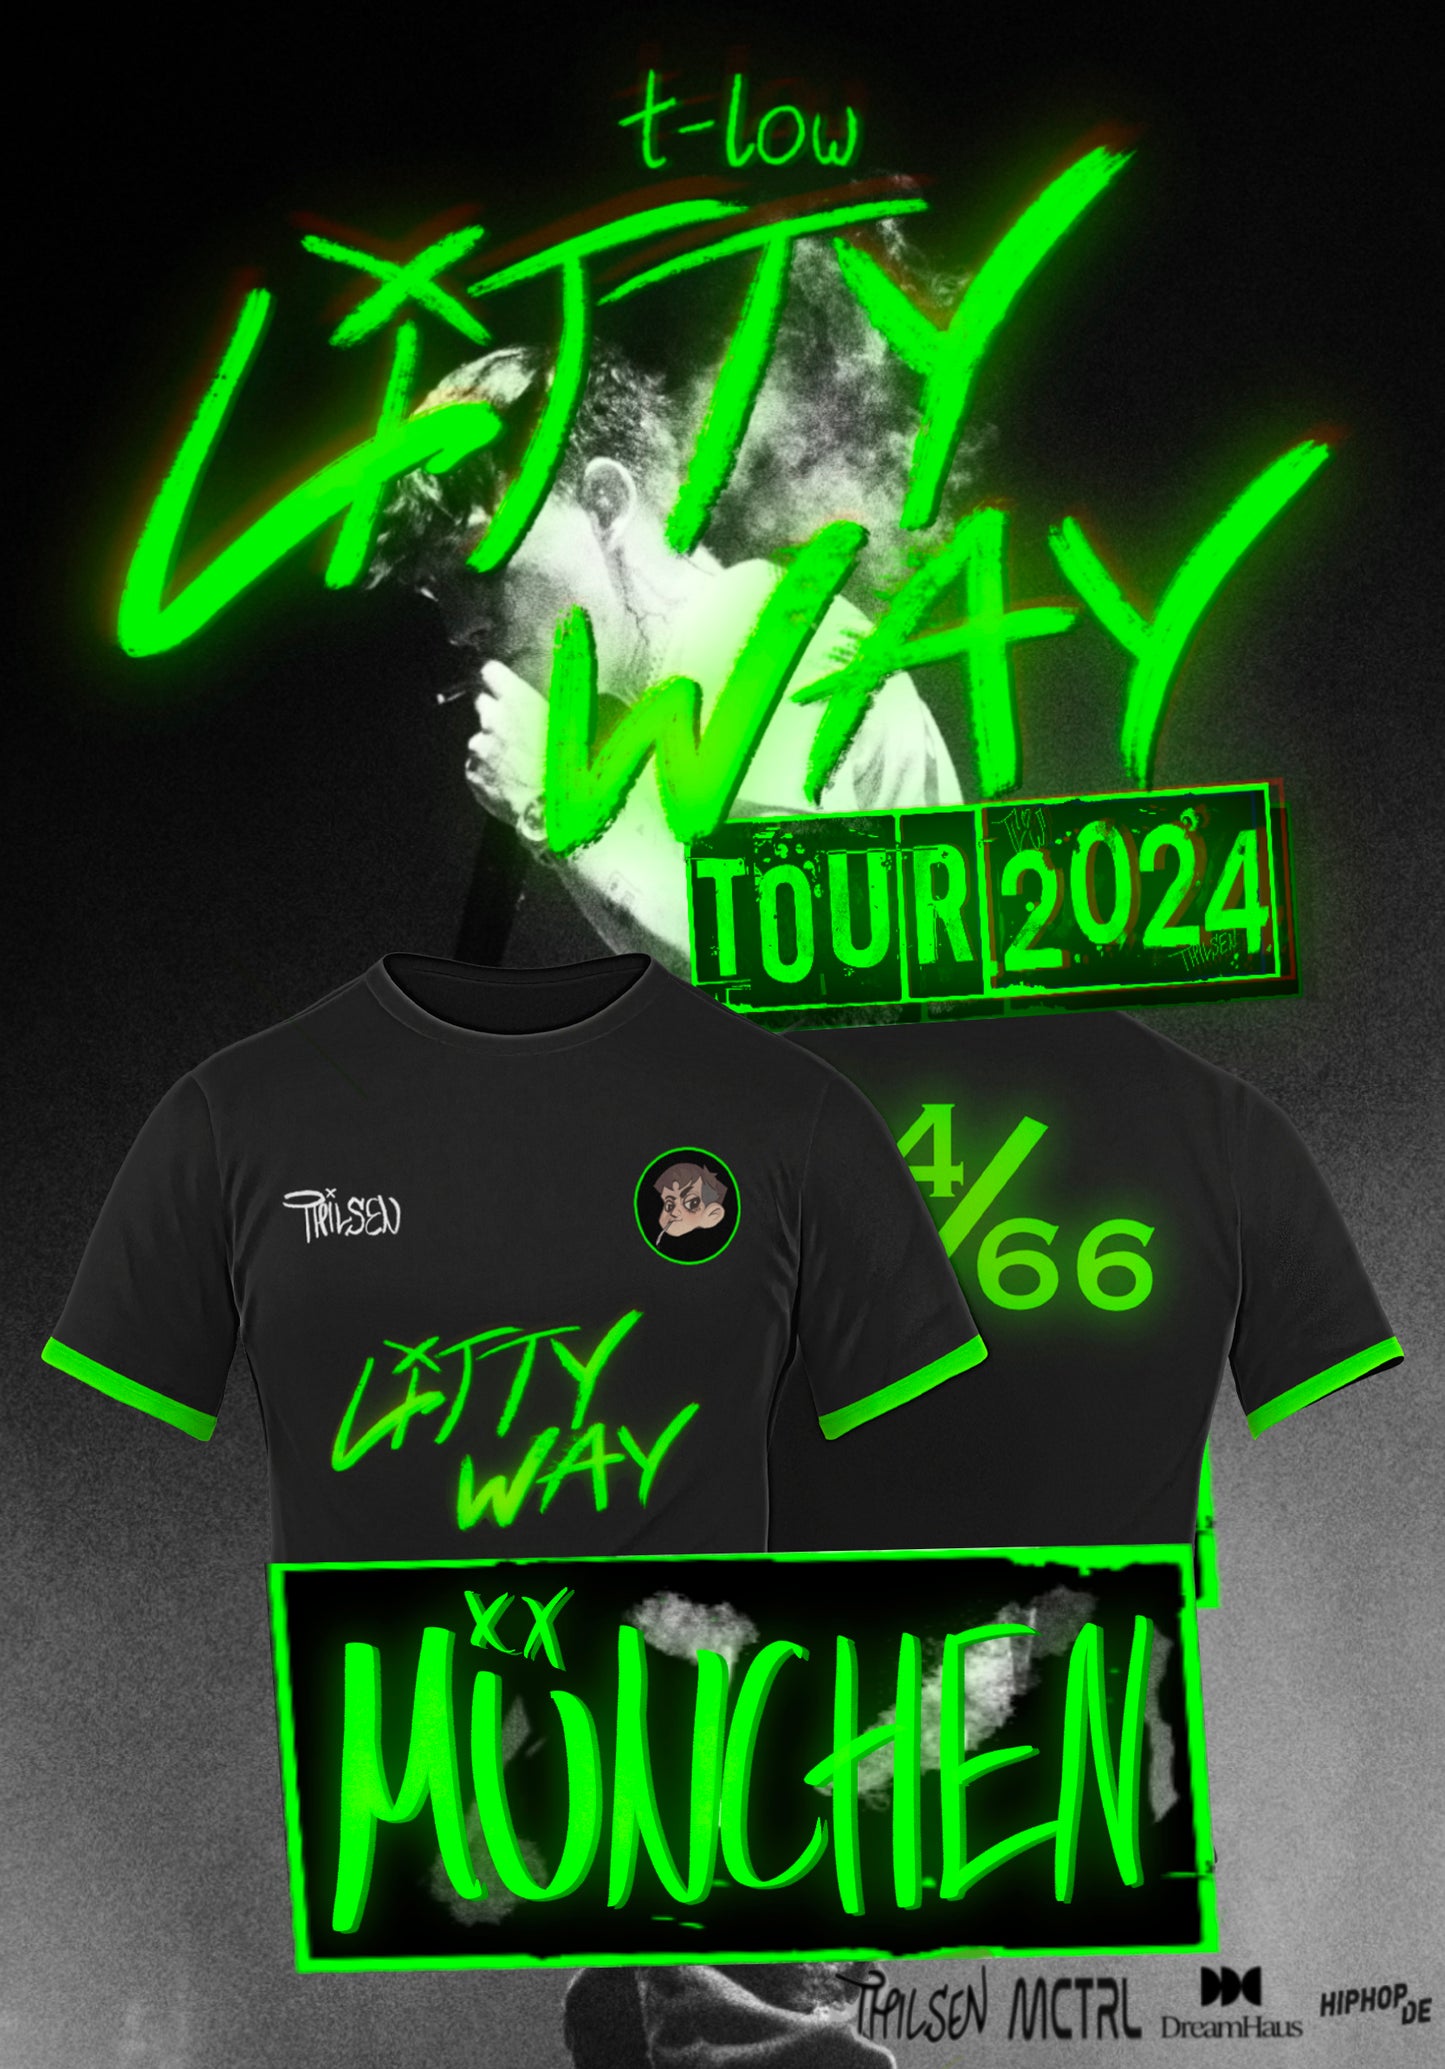 E-Ticket & Trikot Bundle - t-low Litty Way Tour 2024 München